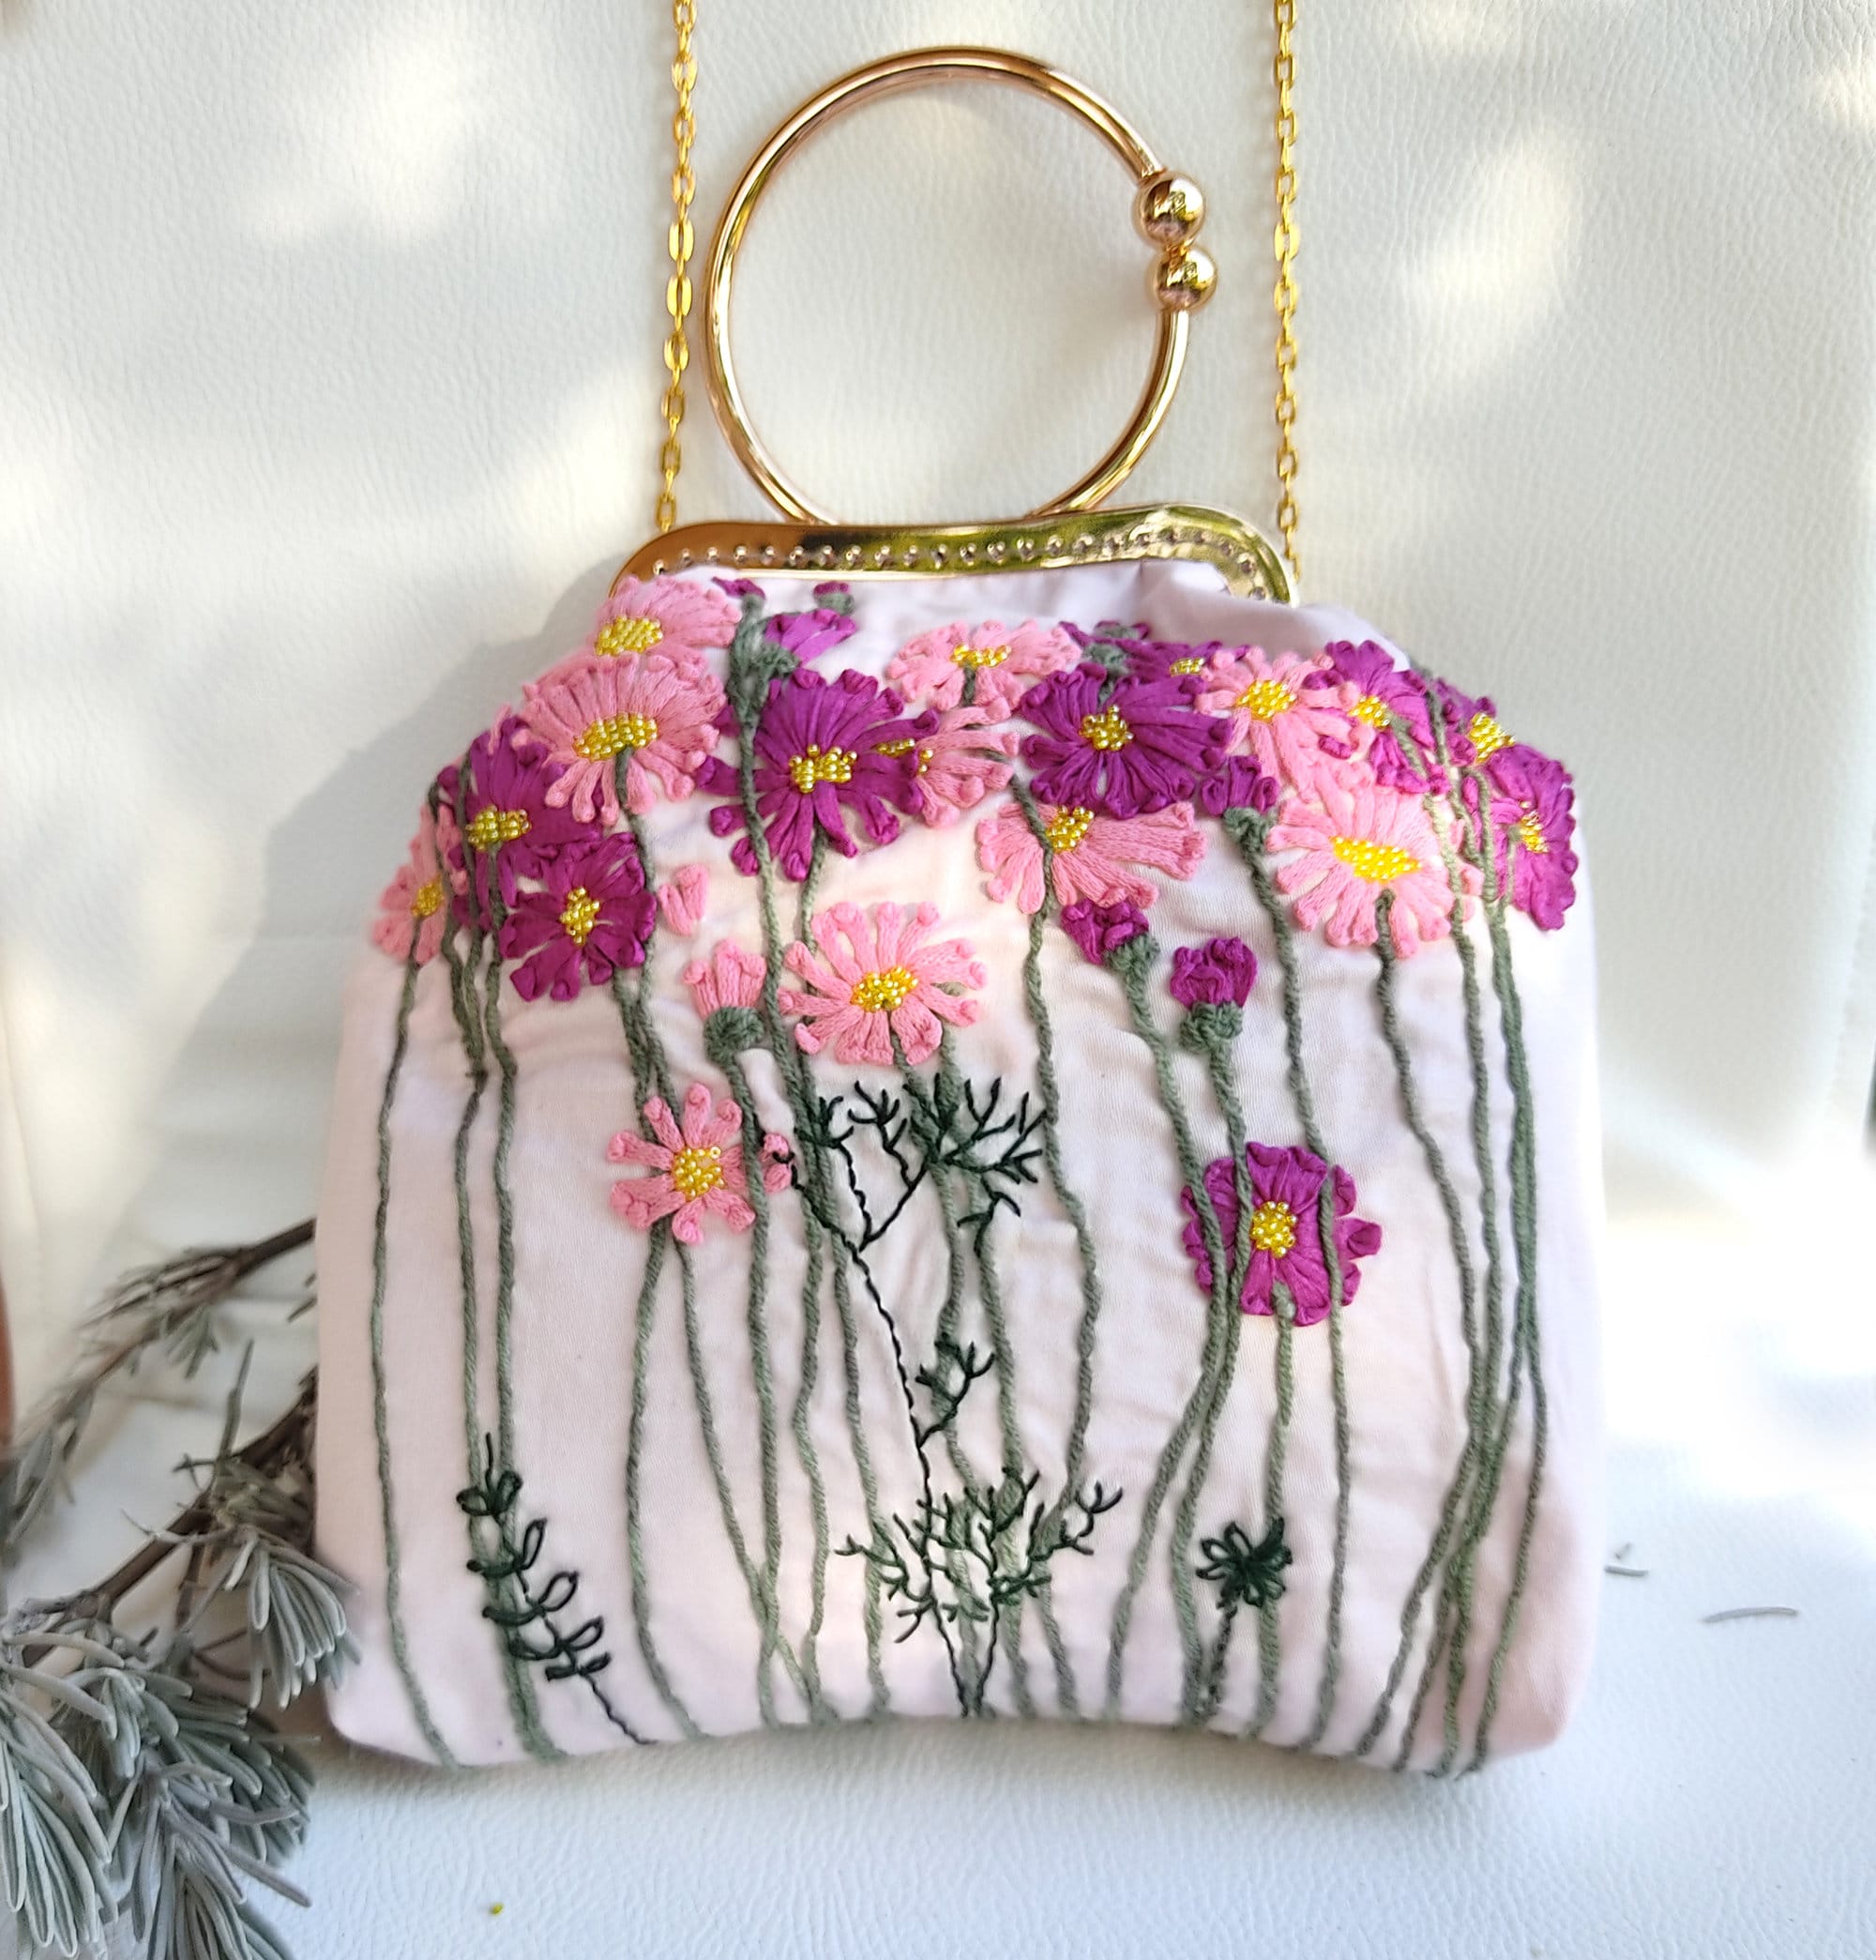 Floral Embroidered Purse, Floral Clutch Handbag 9×6 Inch